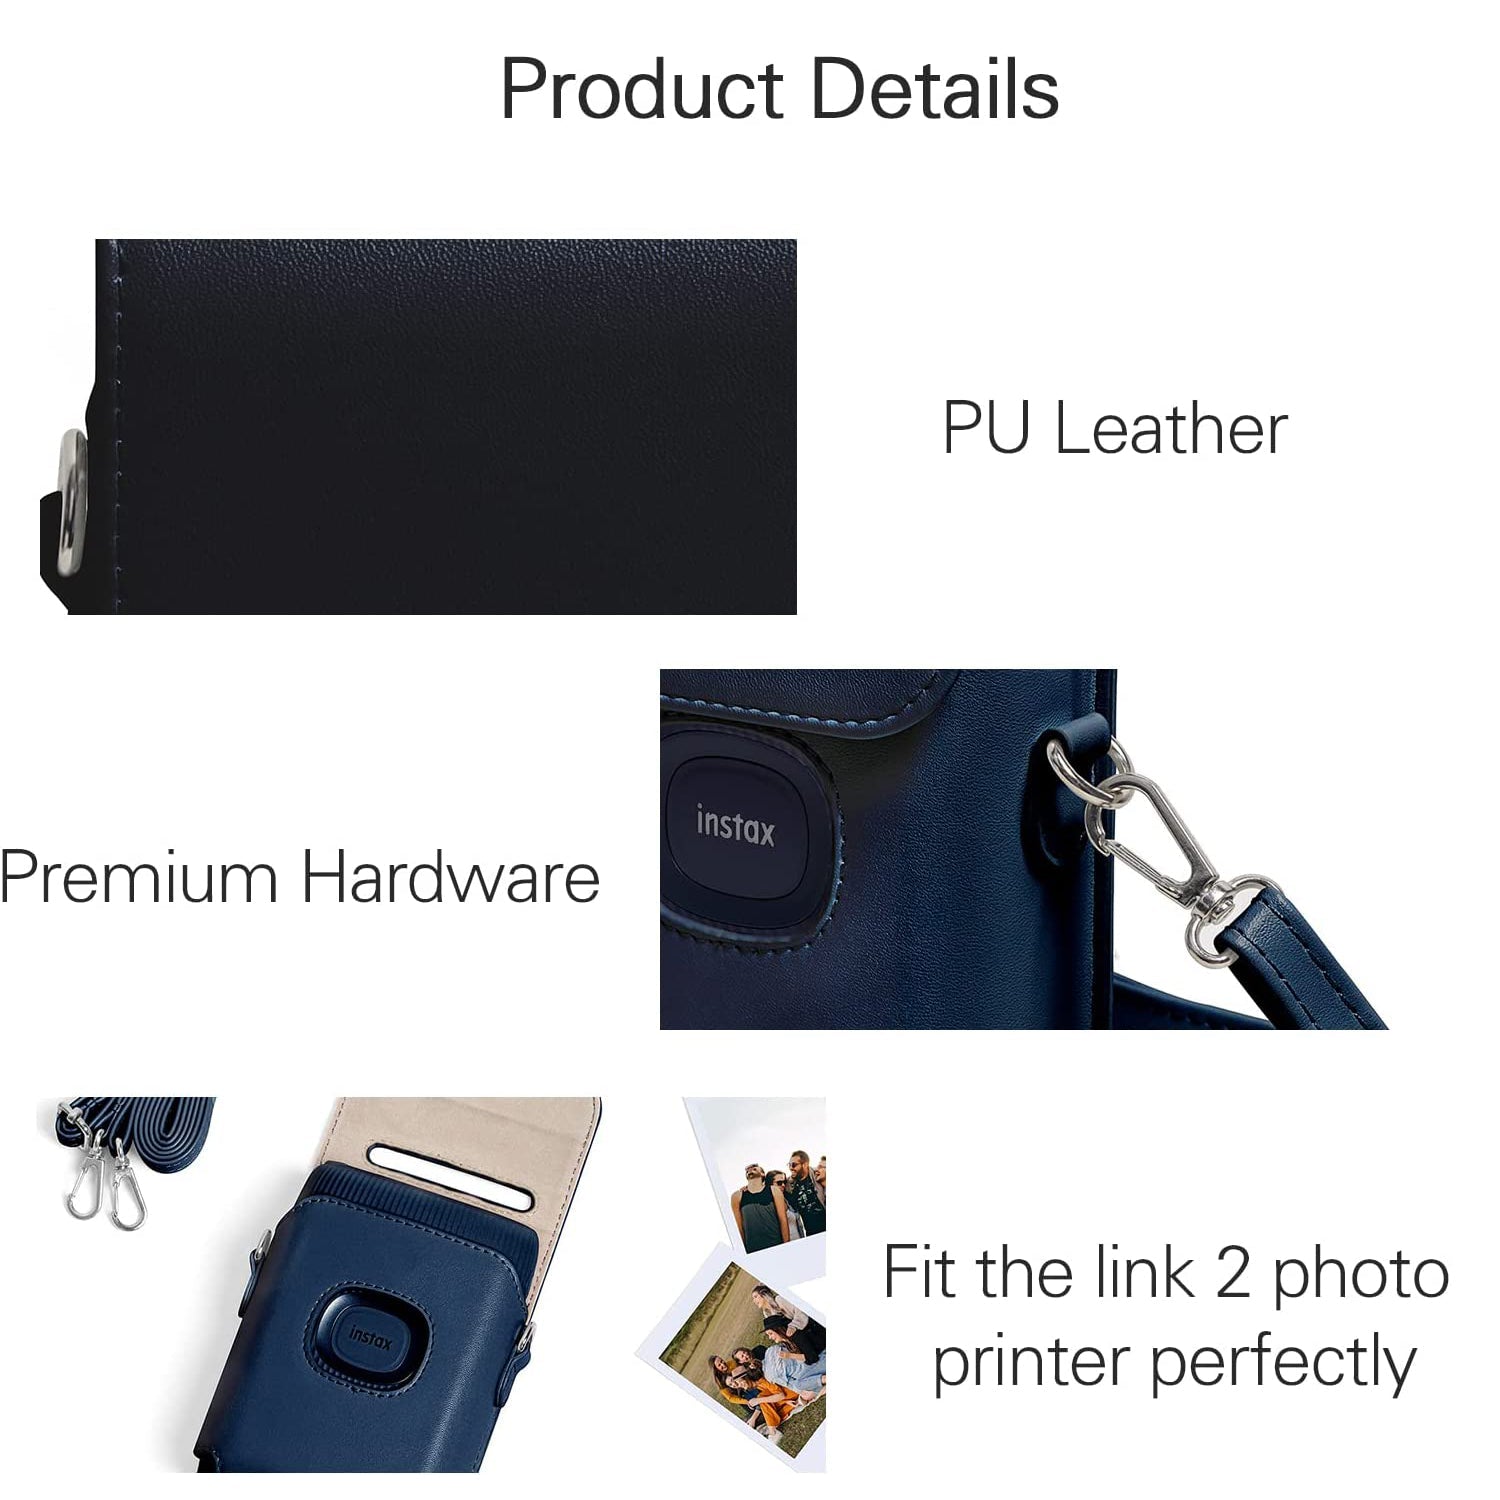 Zenko Instax Mini Compatible Link 2 Photo Printer PU Leather Protective Cover (Blue)